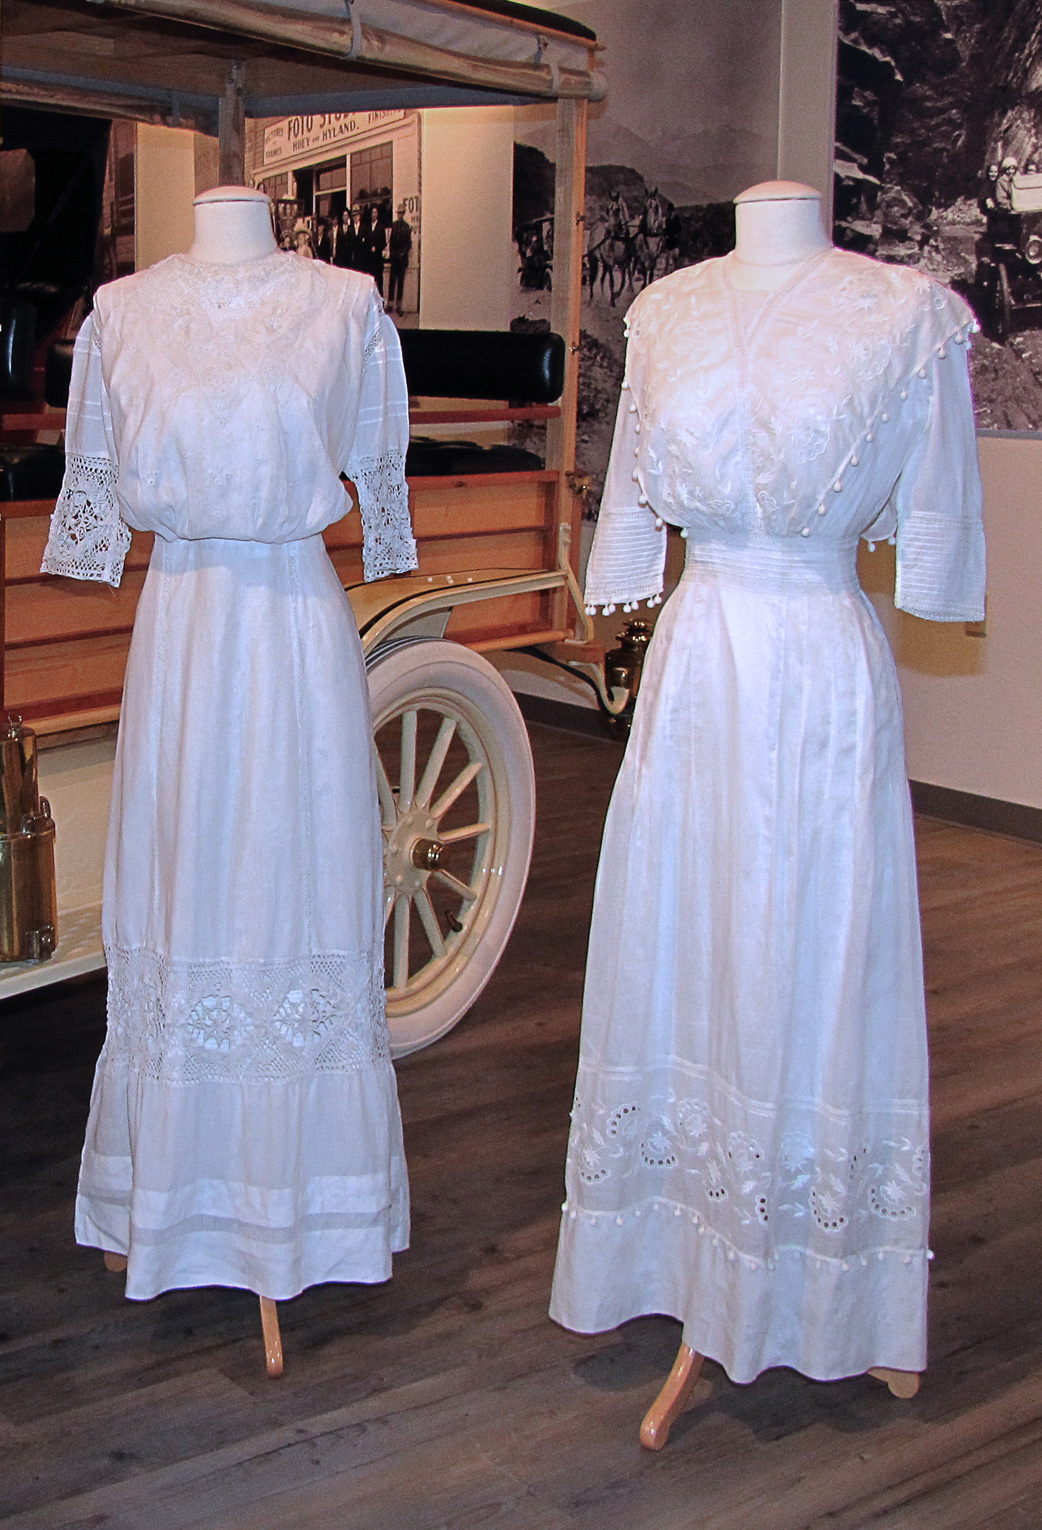 Fountainhead Antique Auto Museum: Lingerie Dresses of the Edwardian Era